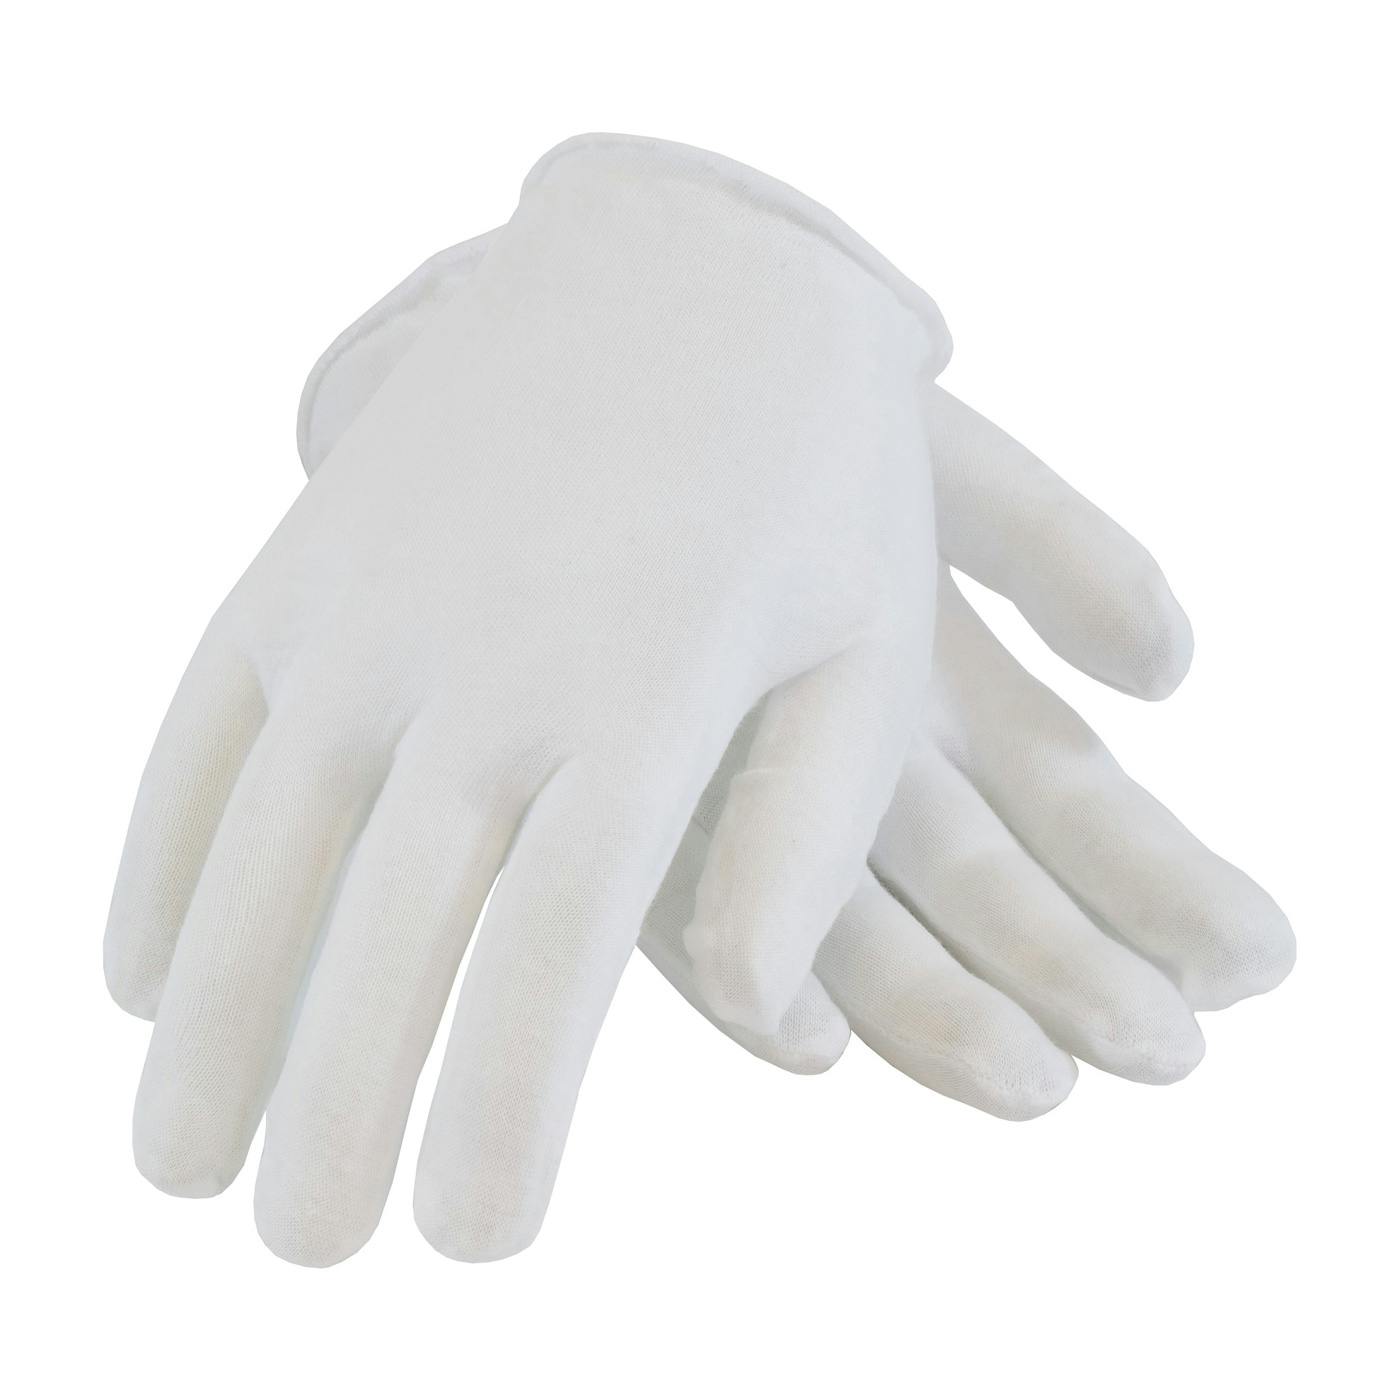 Premium, Light Weight Cotton Lisle Inspection Glove with Unhemmed Cuff - Ladies', White (97-501) - LADIES